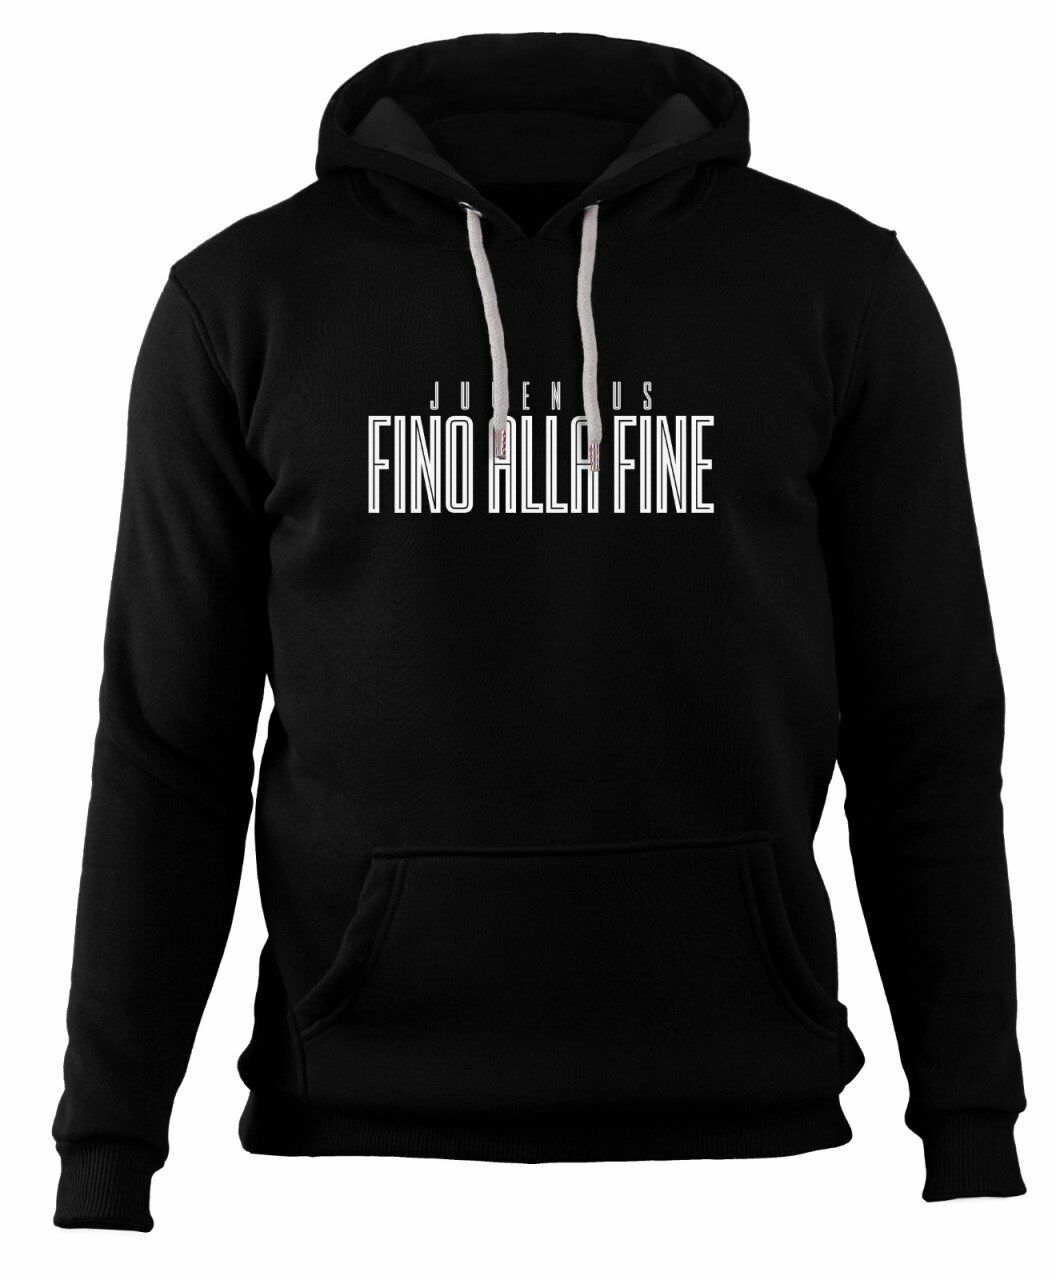 Juventus 'Fino Alla Fine' II Sweatshirt